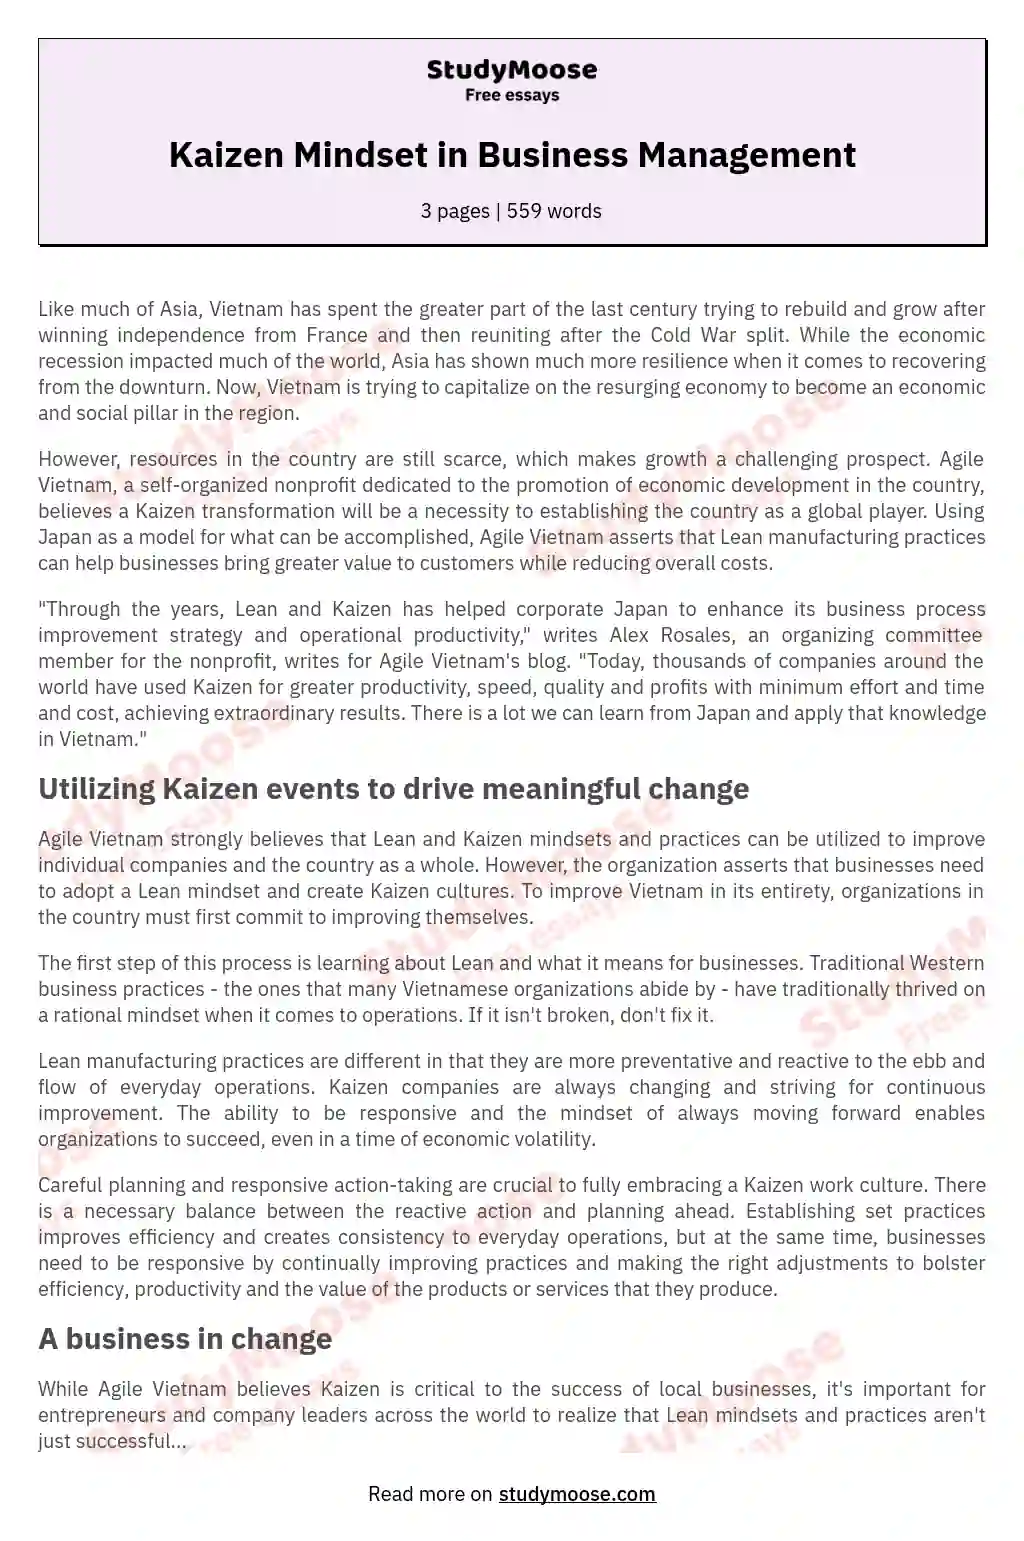 Kaizen Mindset in Business Management essay